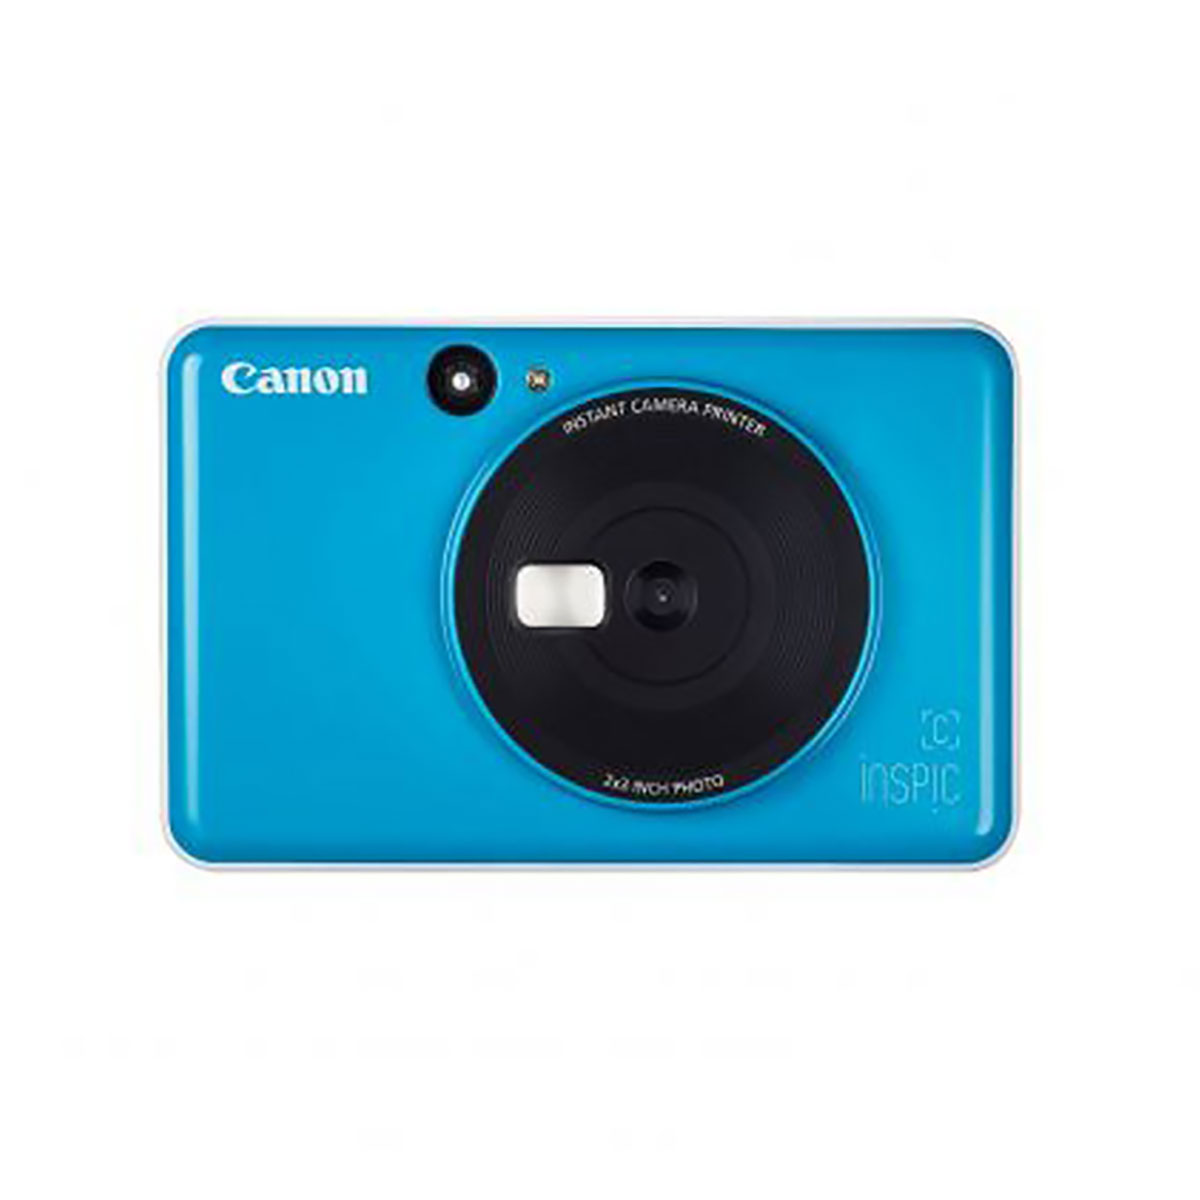 Canon - Instant Camera Printer, CV-123, Blue